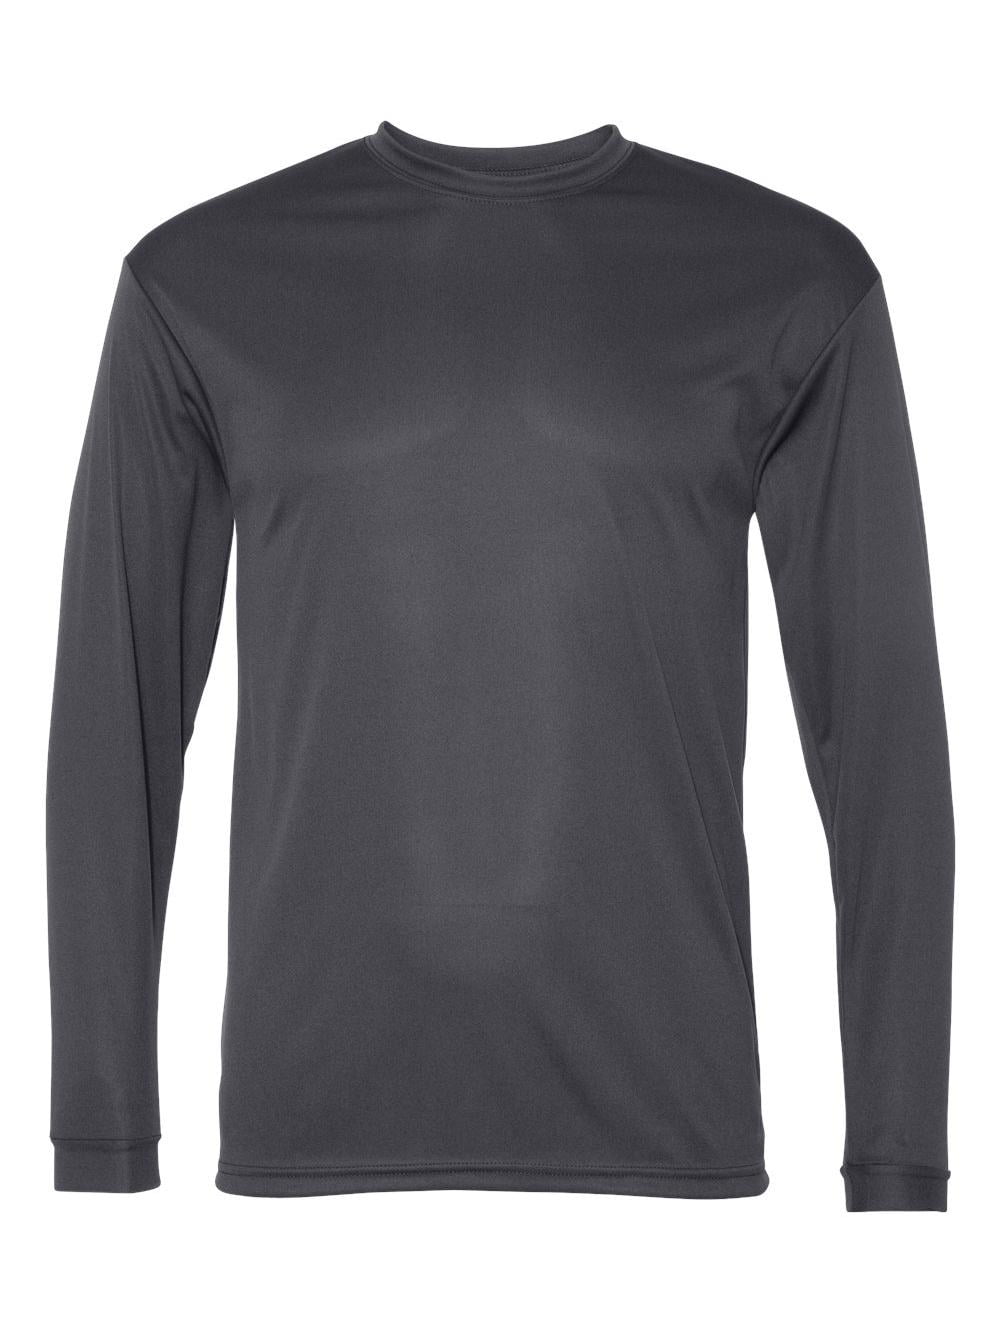 C2 Sport - Performance Long Sleeve T-Shirt - 5104 - Graphite - Size: 2XL 